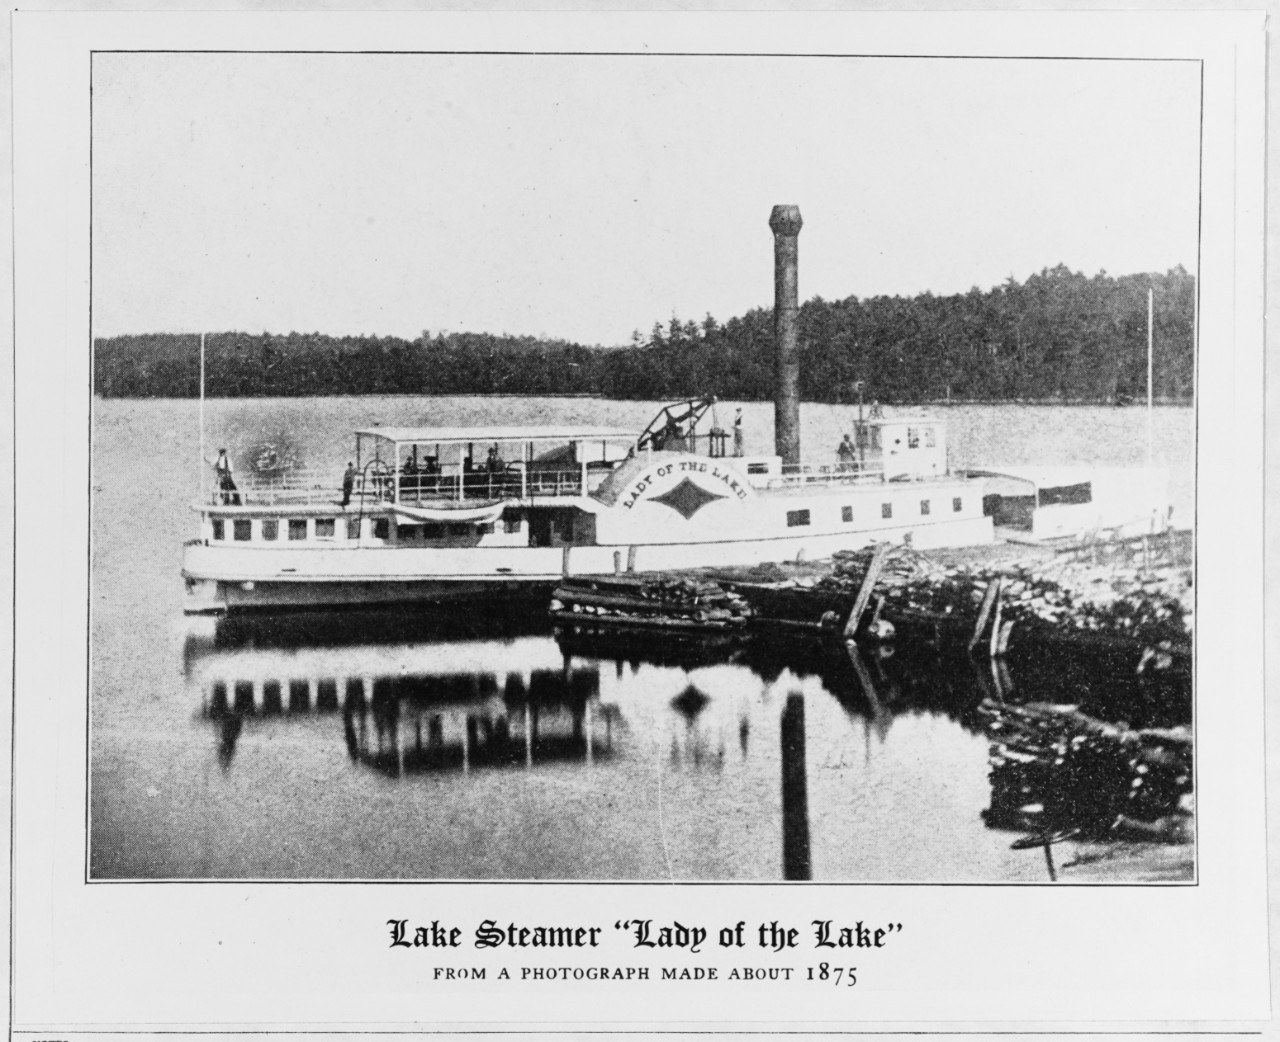 LADY OF THE LAKE Lake Steamer